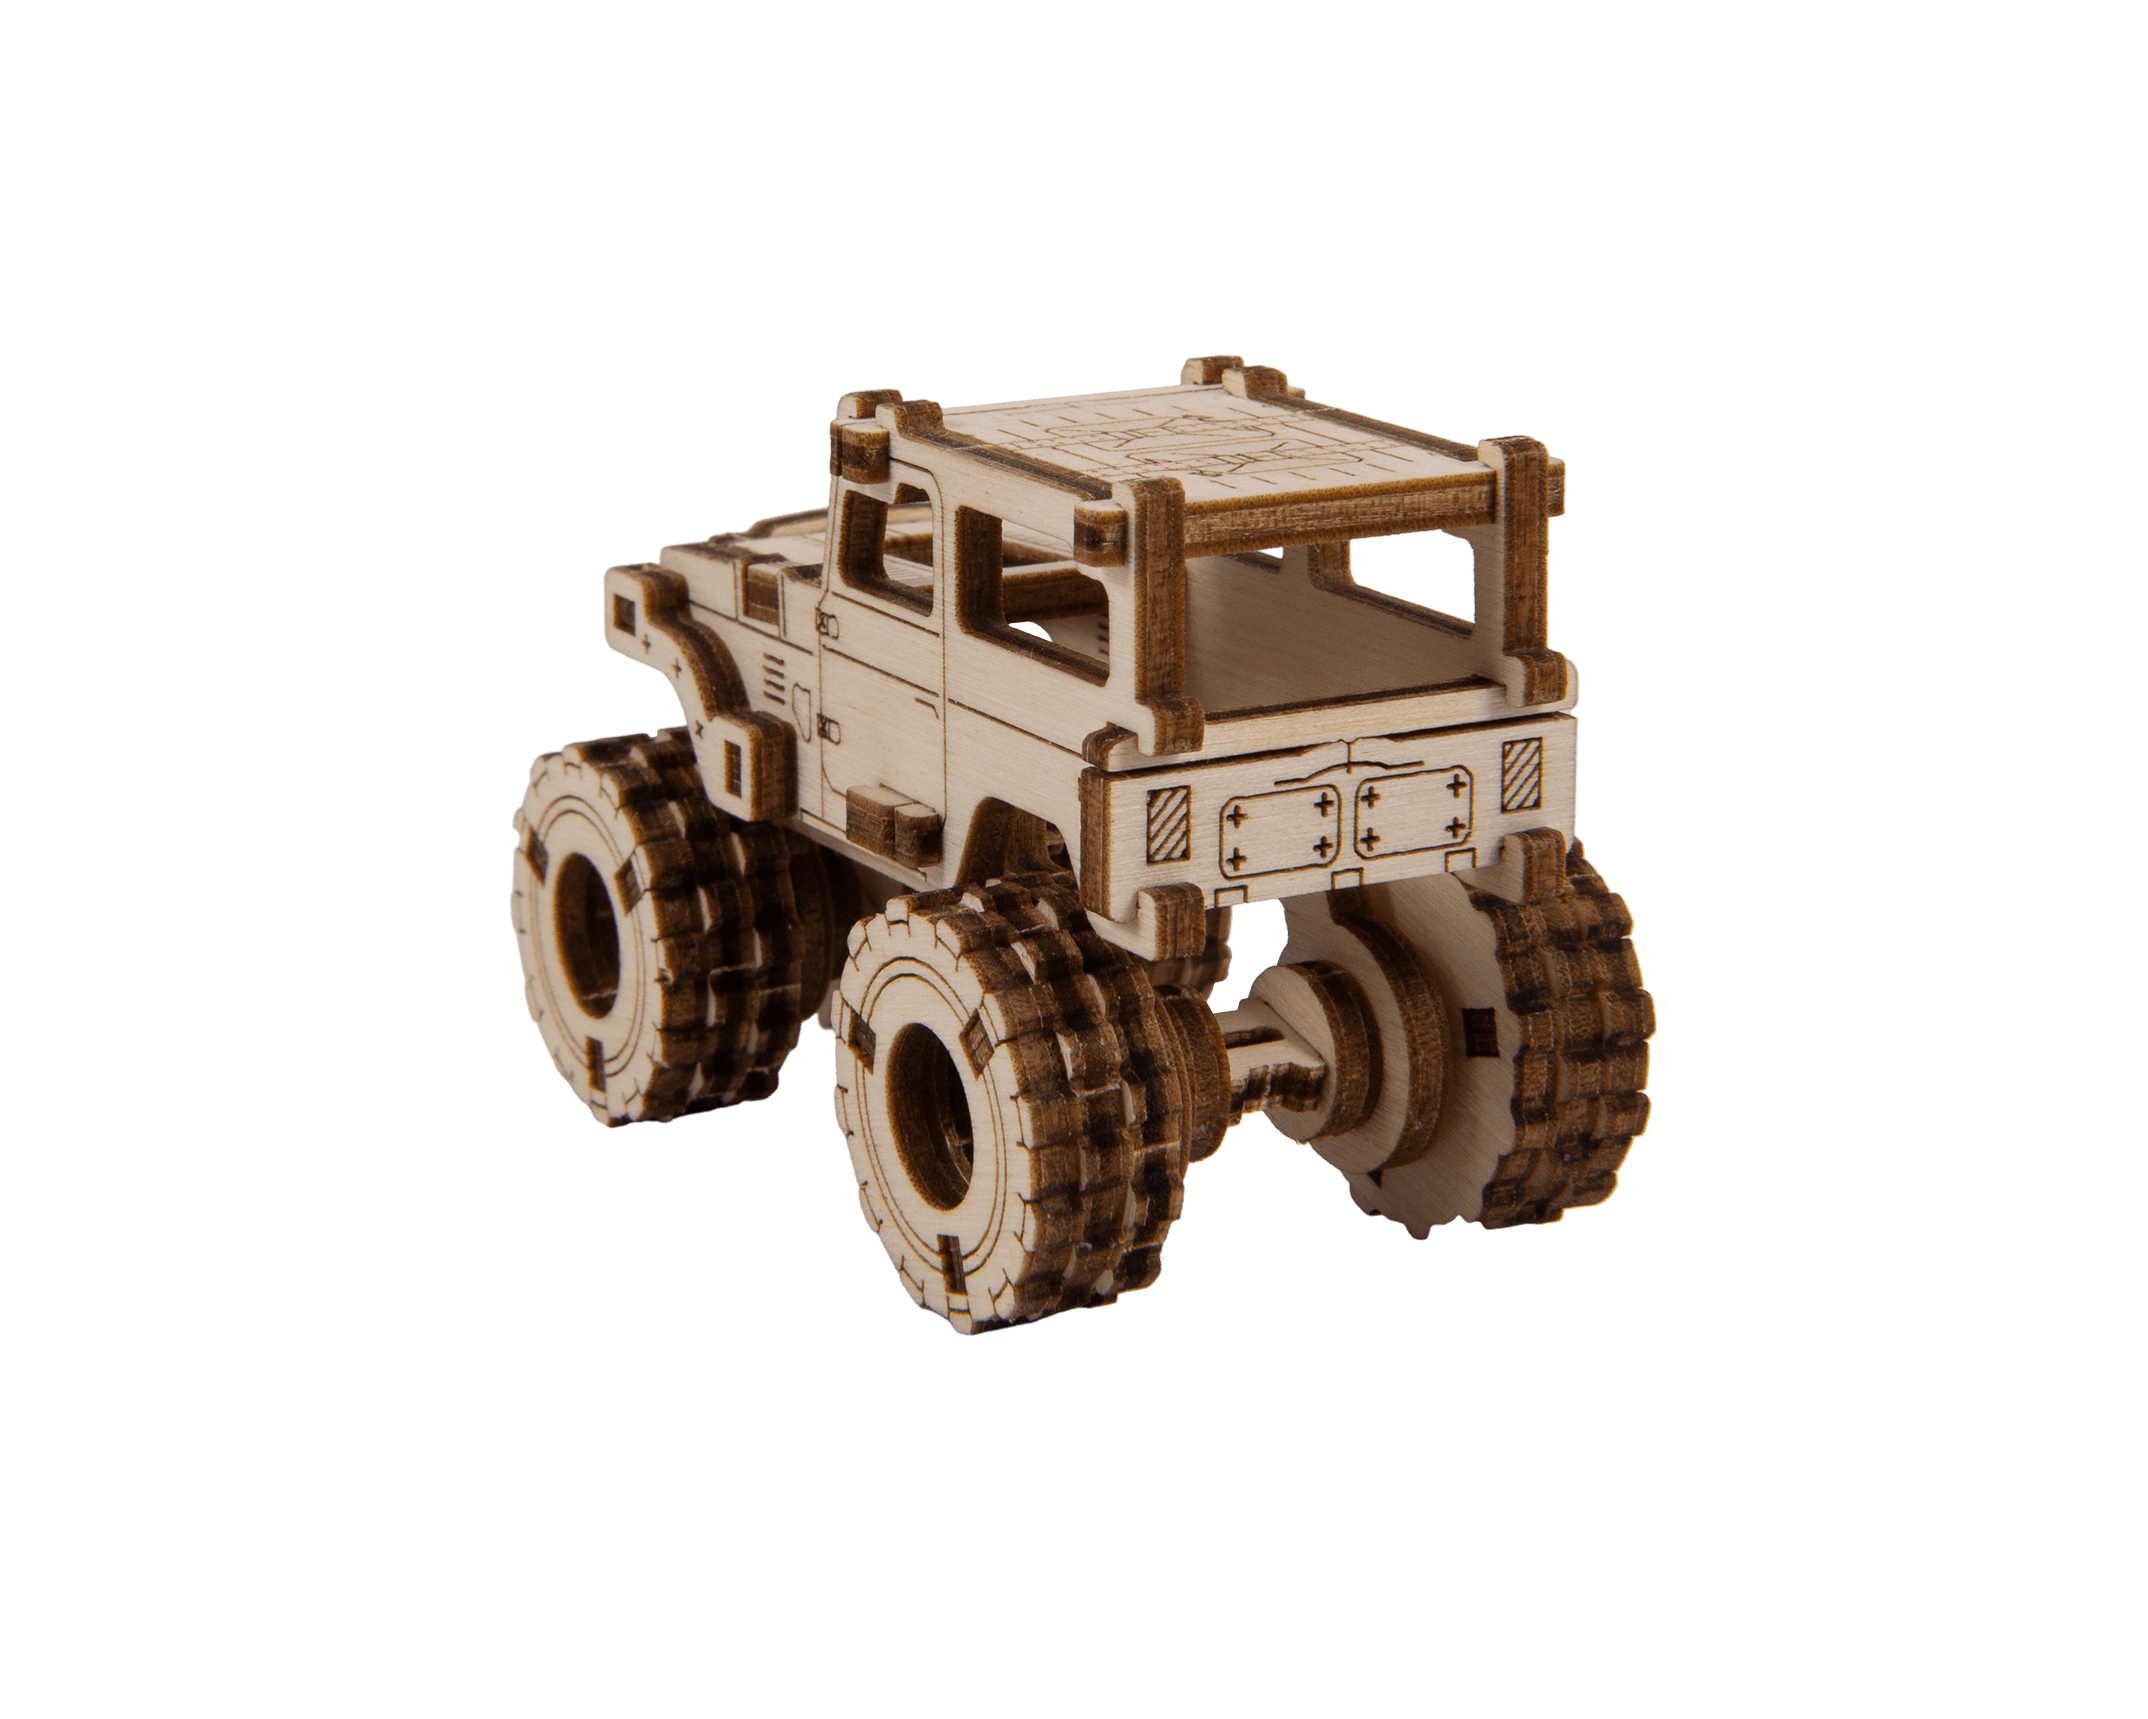 Wooden 3D Puzzle - Monster Truck Model 5